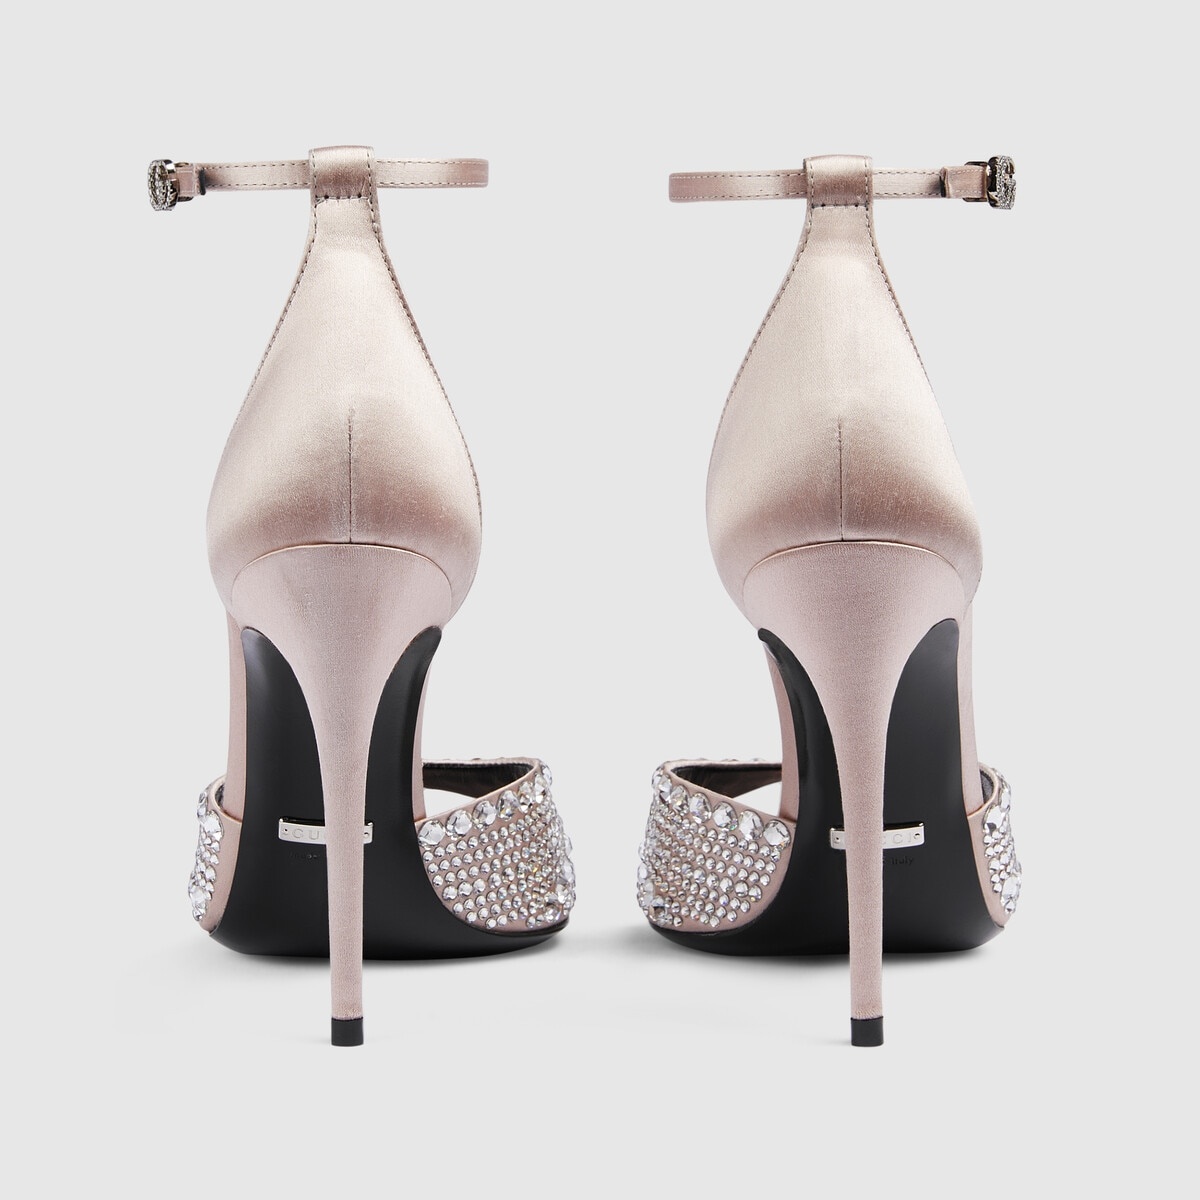 Women's high heel sandals with crystals - 4